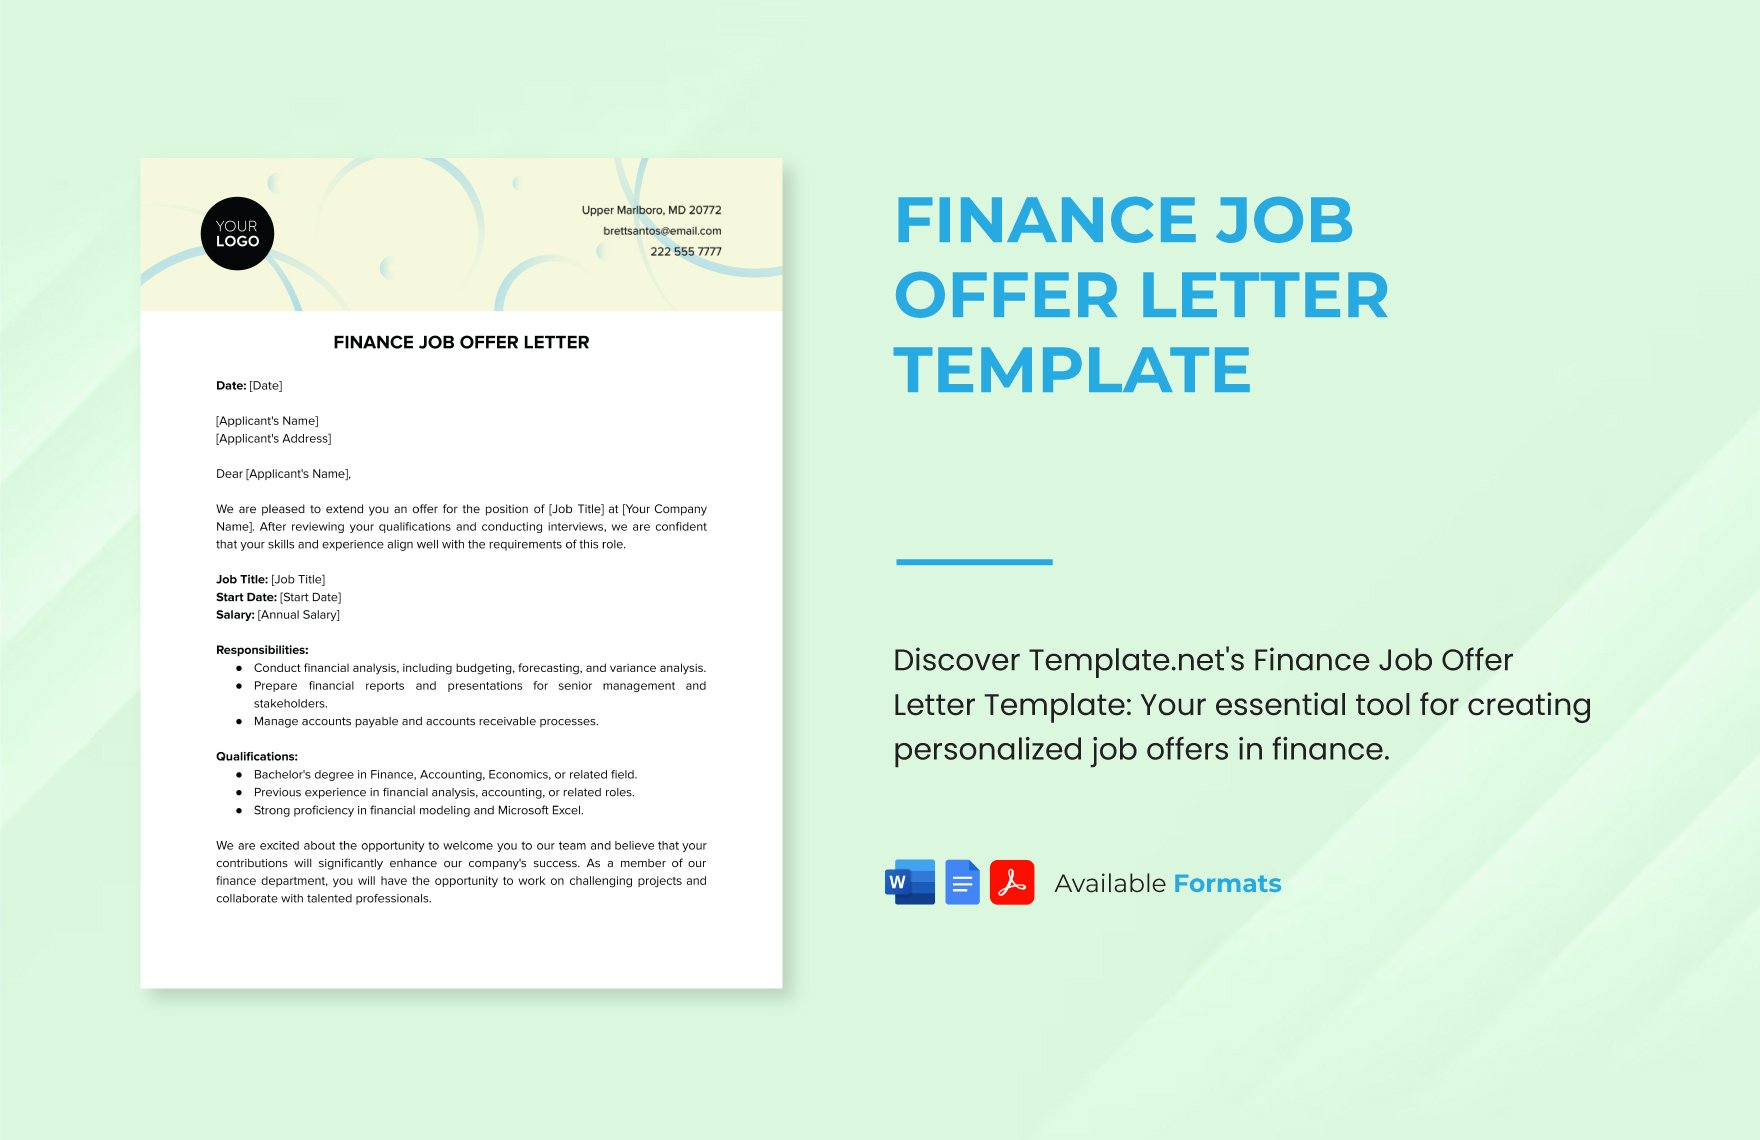 Finance Job Offer Letter Template in Word, Google Docs, PDF